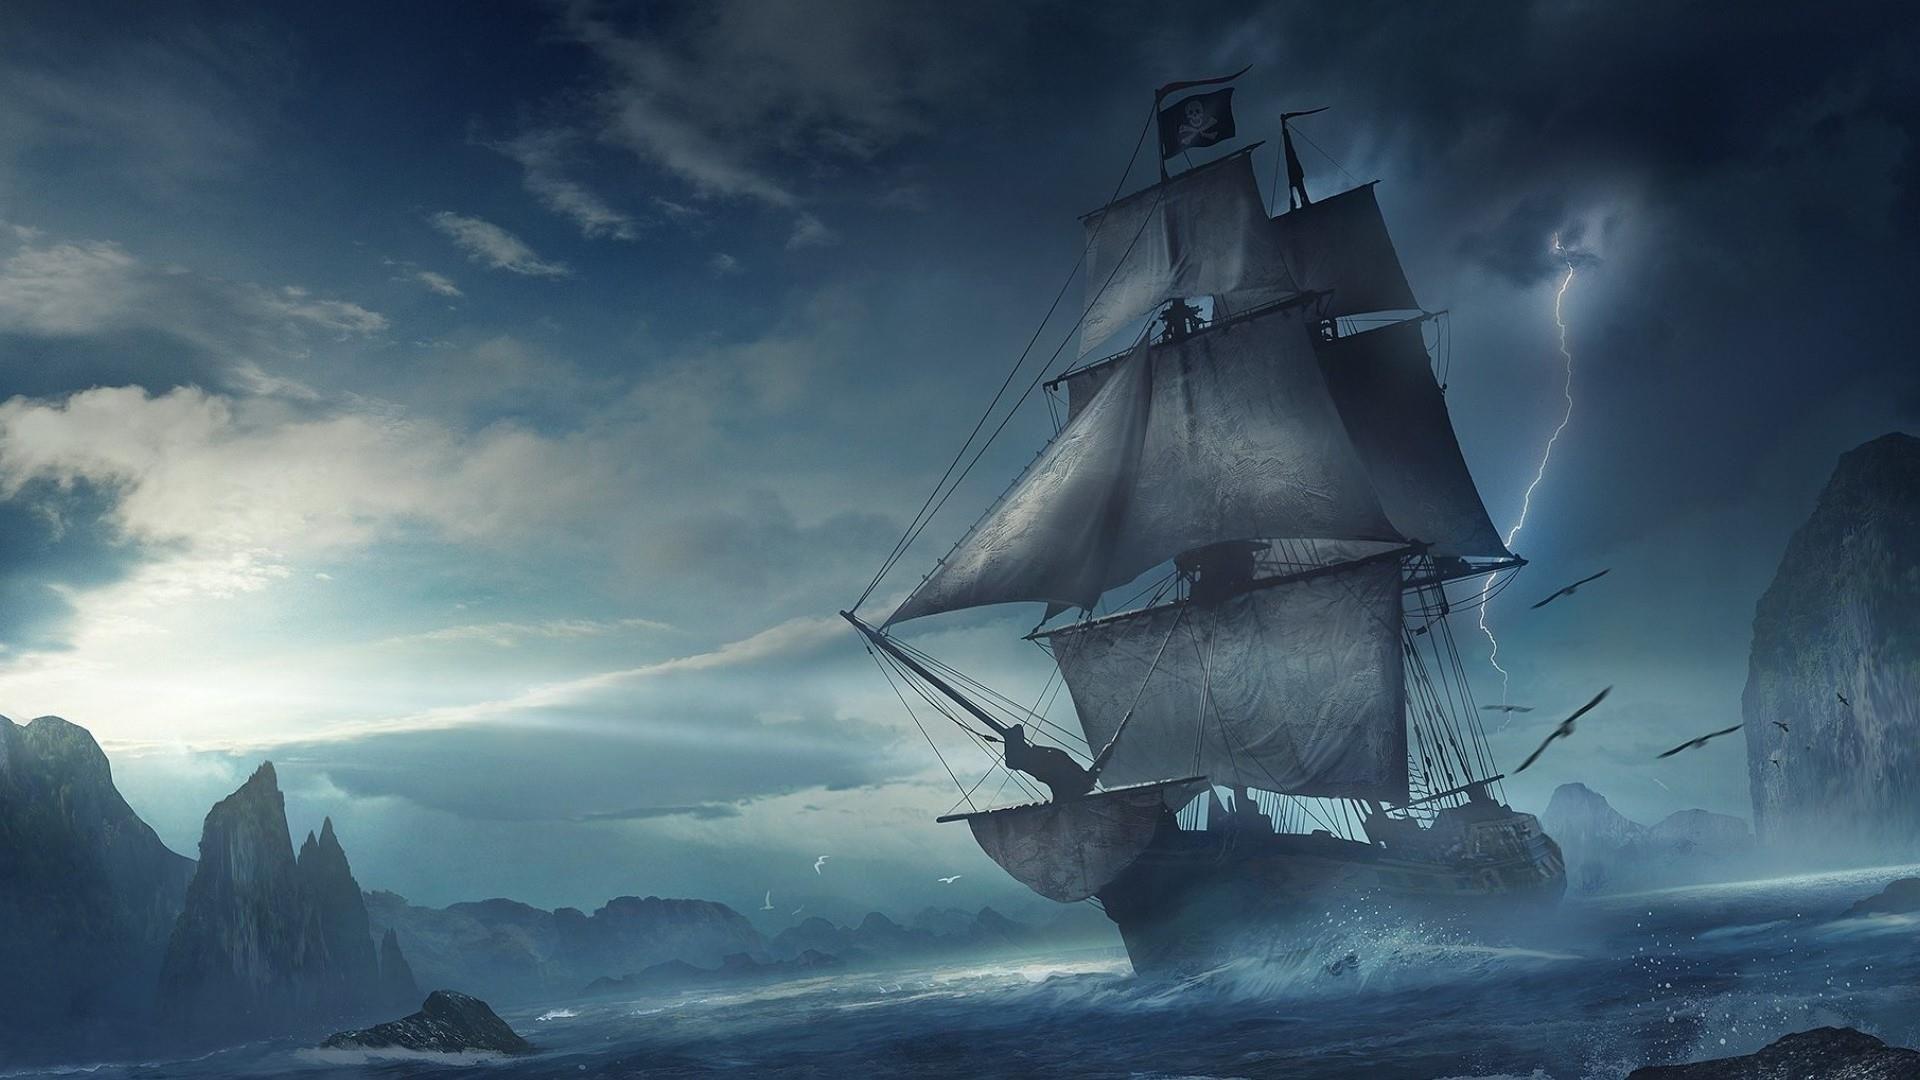 Pirate Ship Wallpaper HD On Wallpaper 1080p HD. Awesome Art